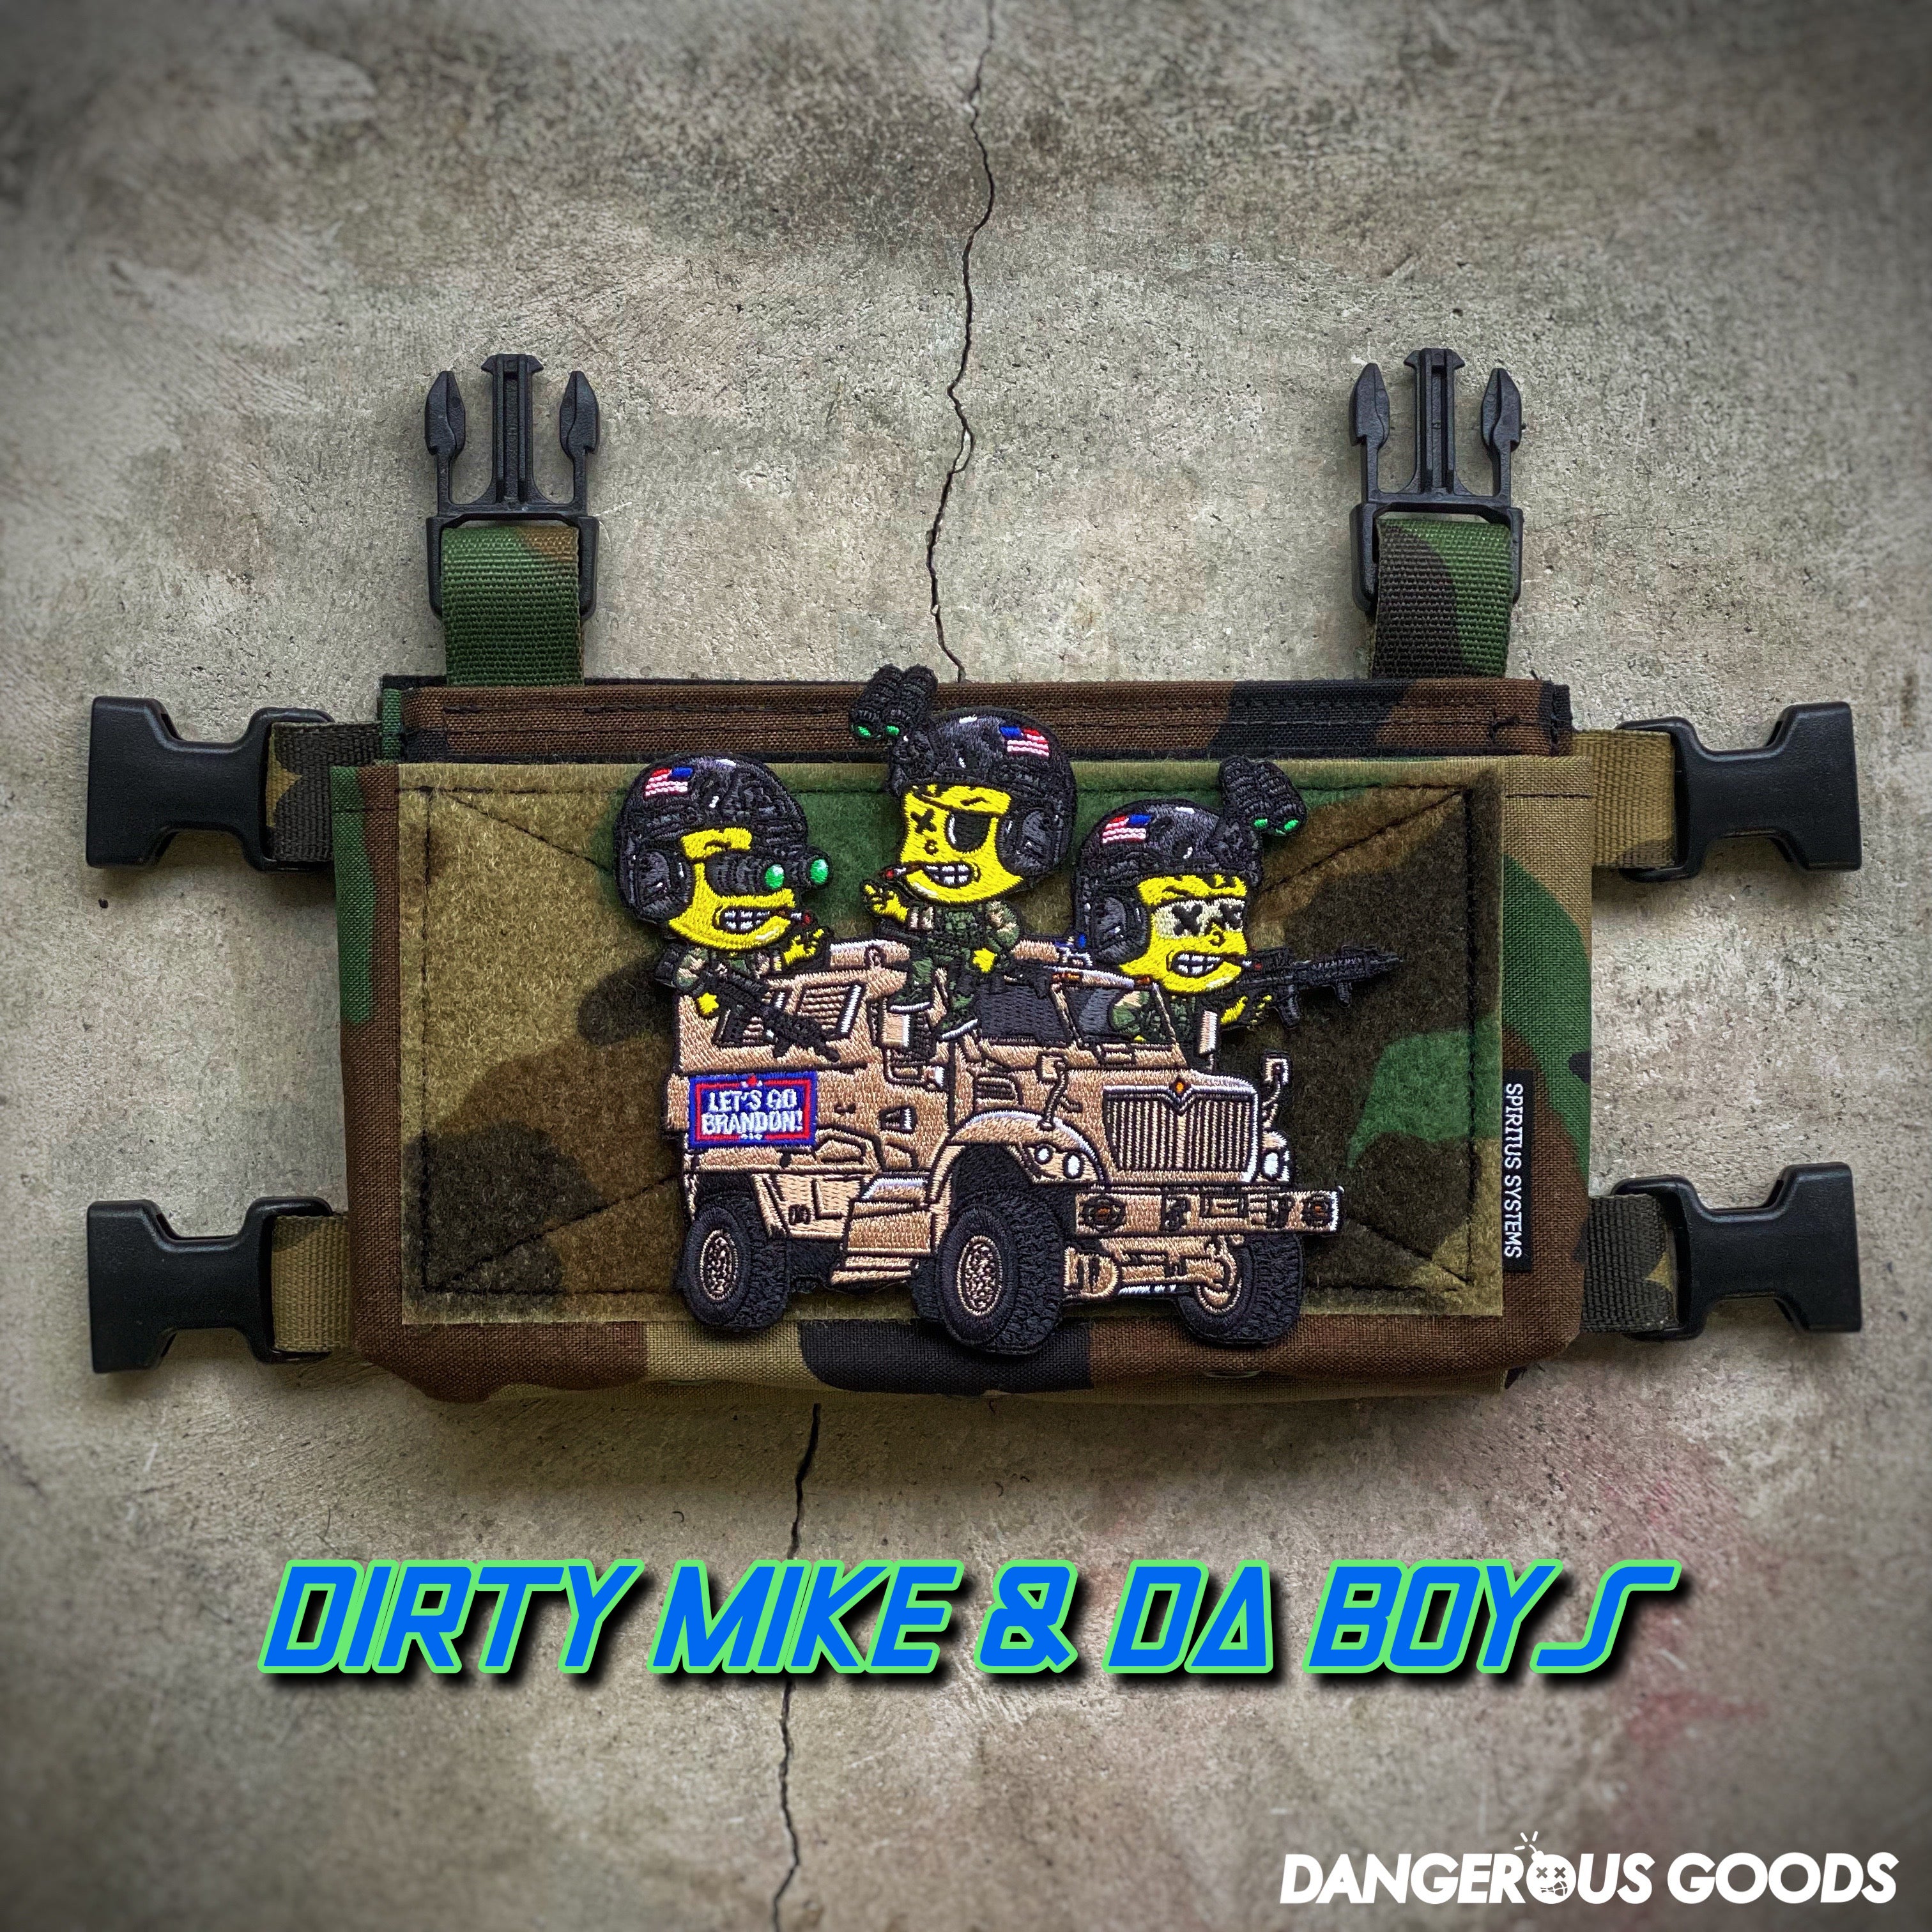 Dangerous Goods®️ Dirty Mike & Da Boys “Let’s Go Brandon” MRAP Patch - FDE Tan